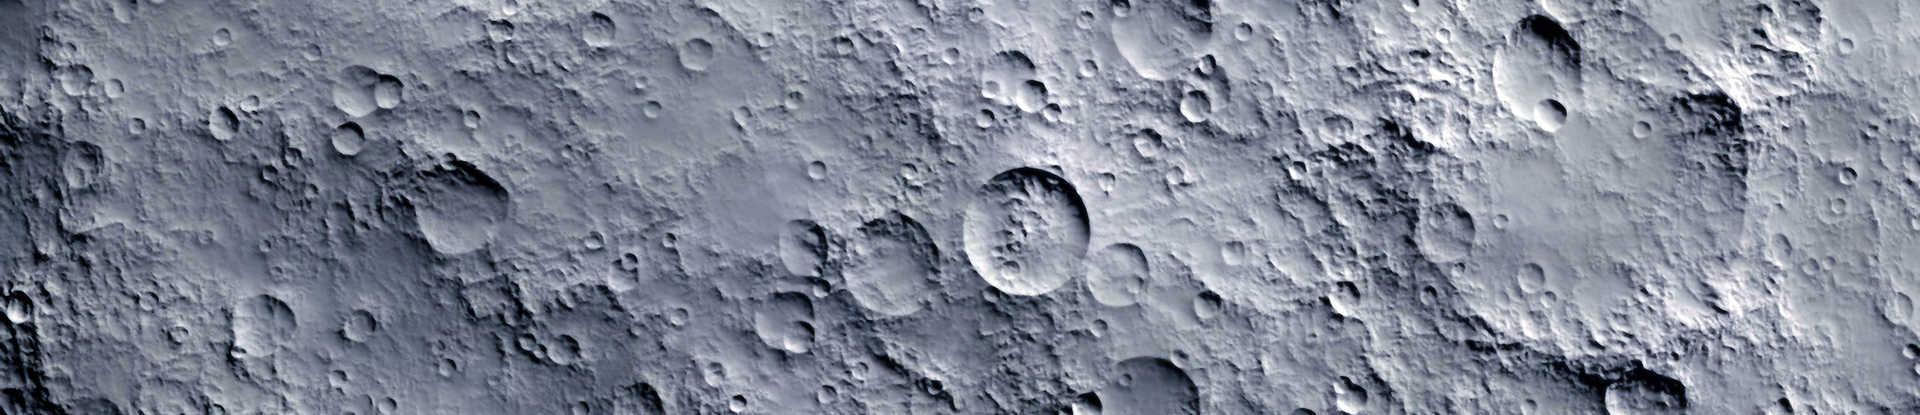 Go to press release: SwRI receives $2 million NASA grant to develop lunar-regolith-measuring instrument